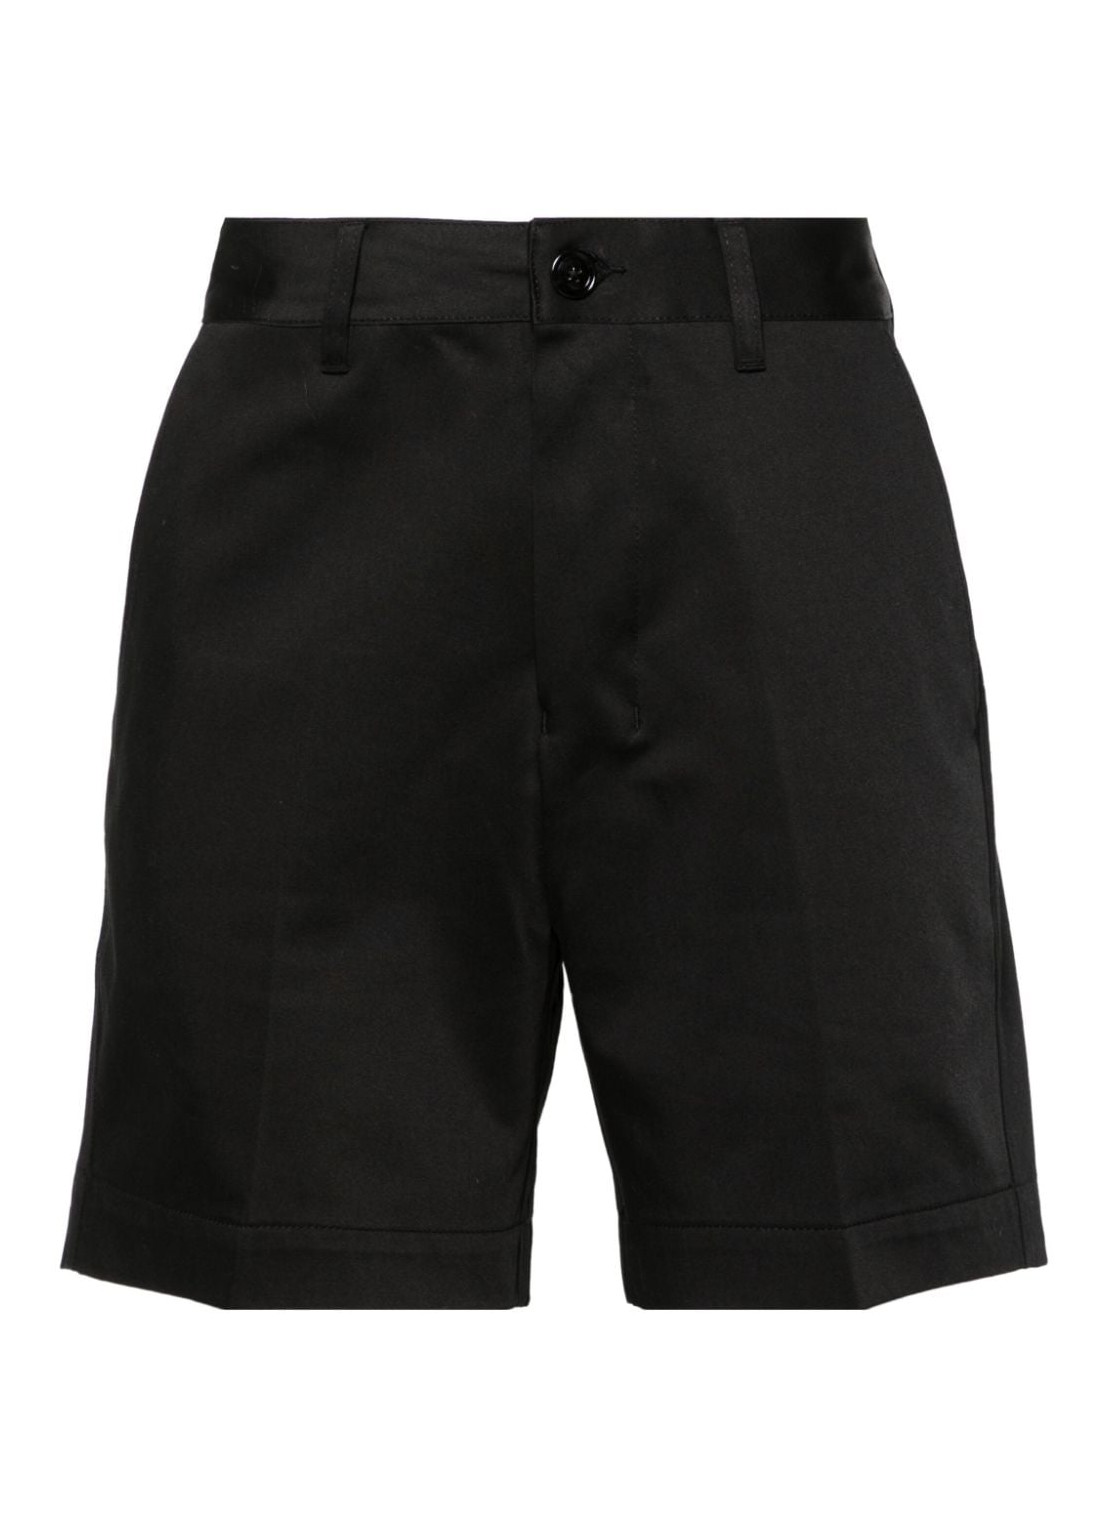 Pantalon corto ami short pant manchino shorts - hso004co0009 001 talla M
 